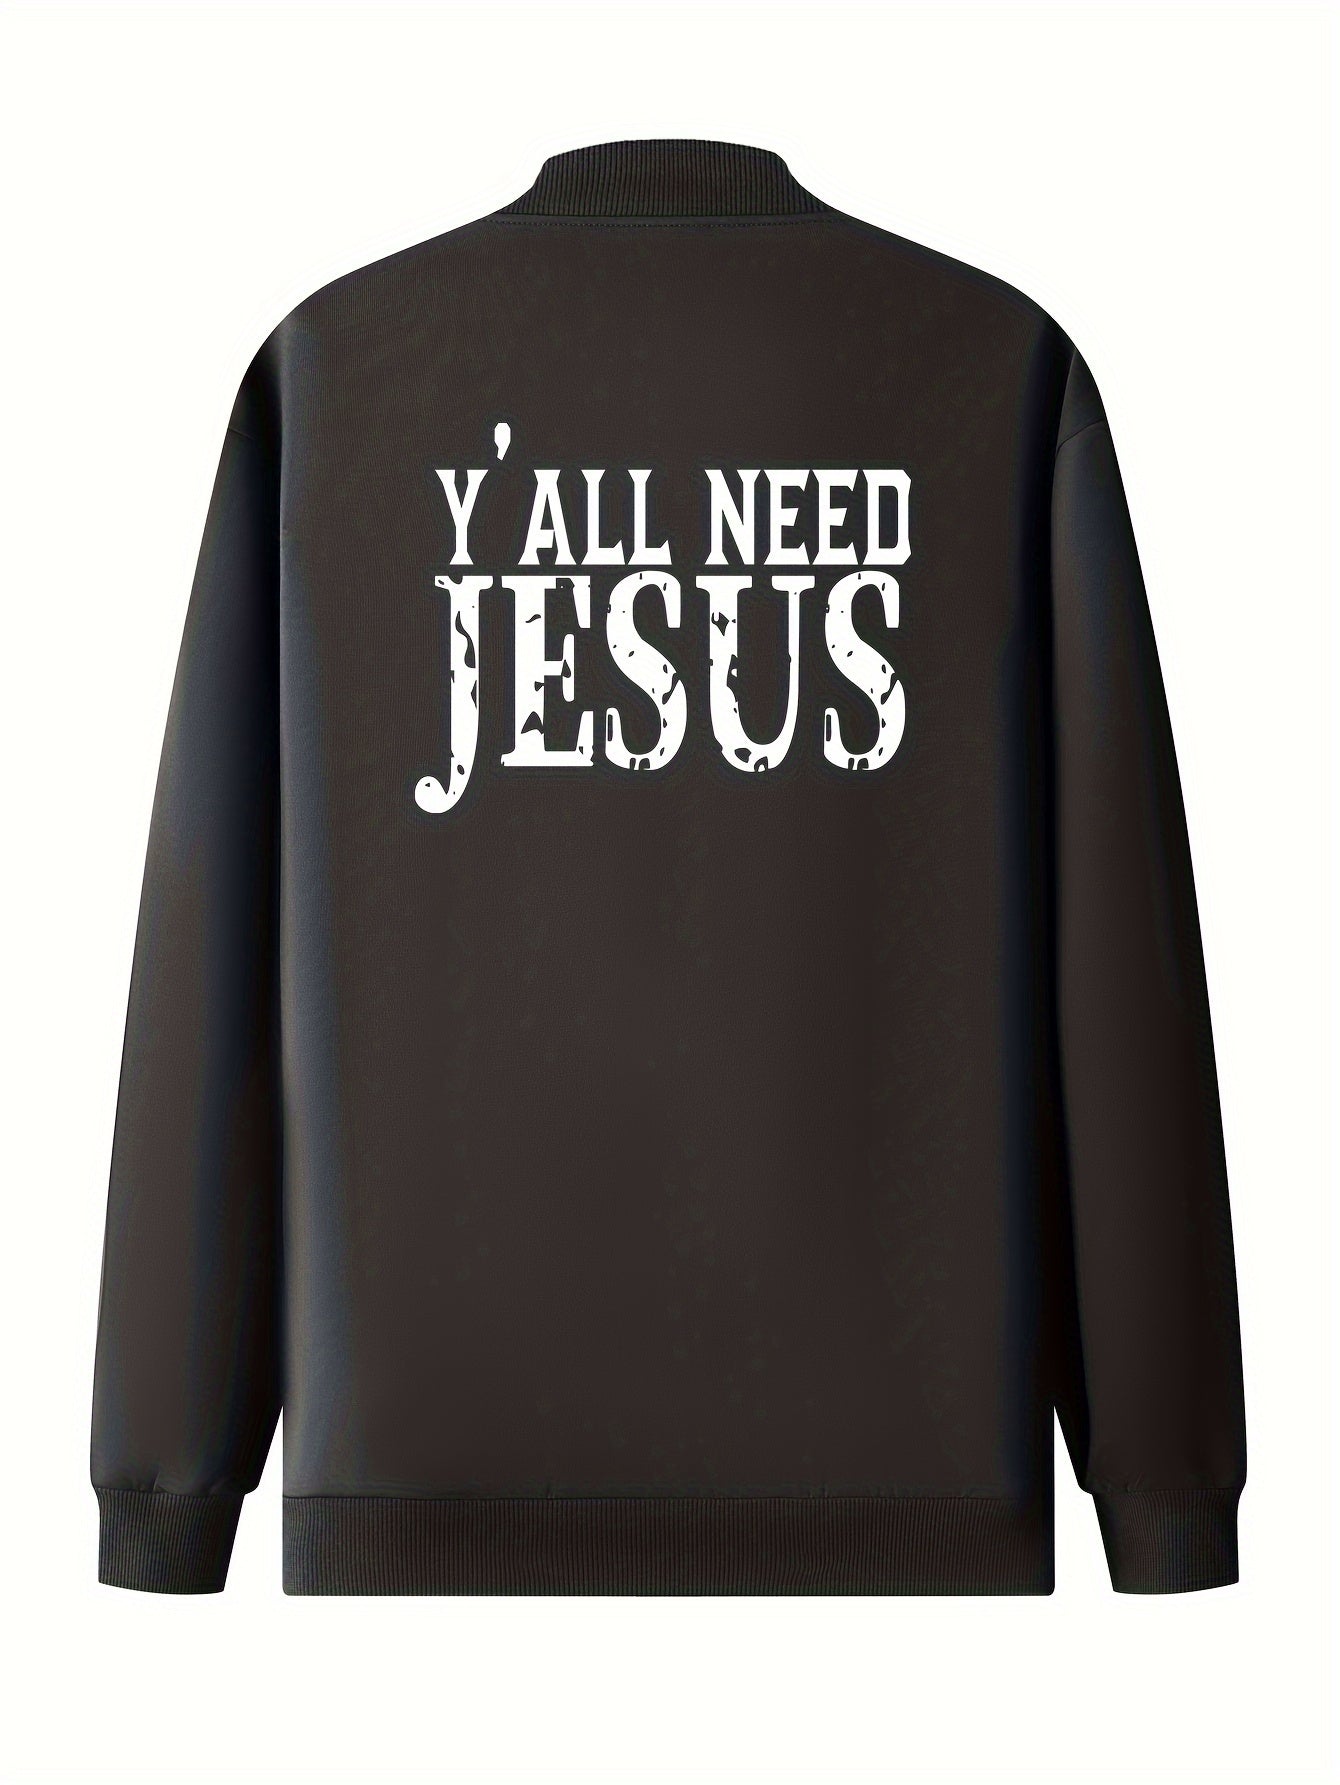 Y'ALL NEED JESUS Men's Christian Jacket claimedbygoddesigns